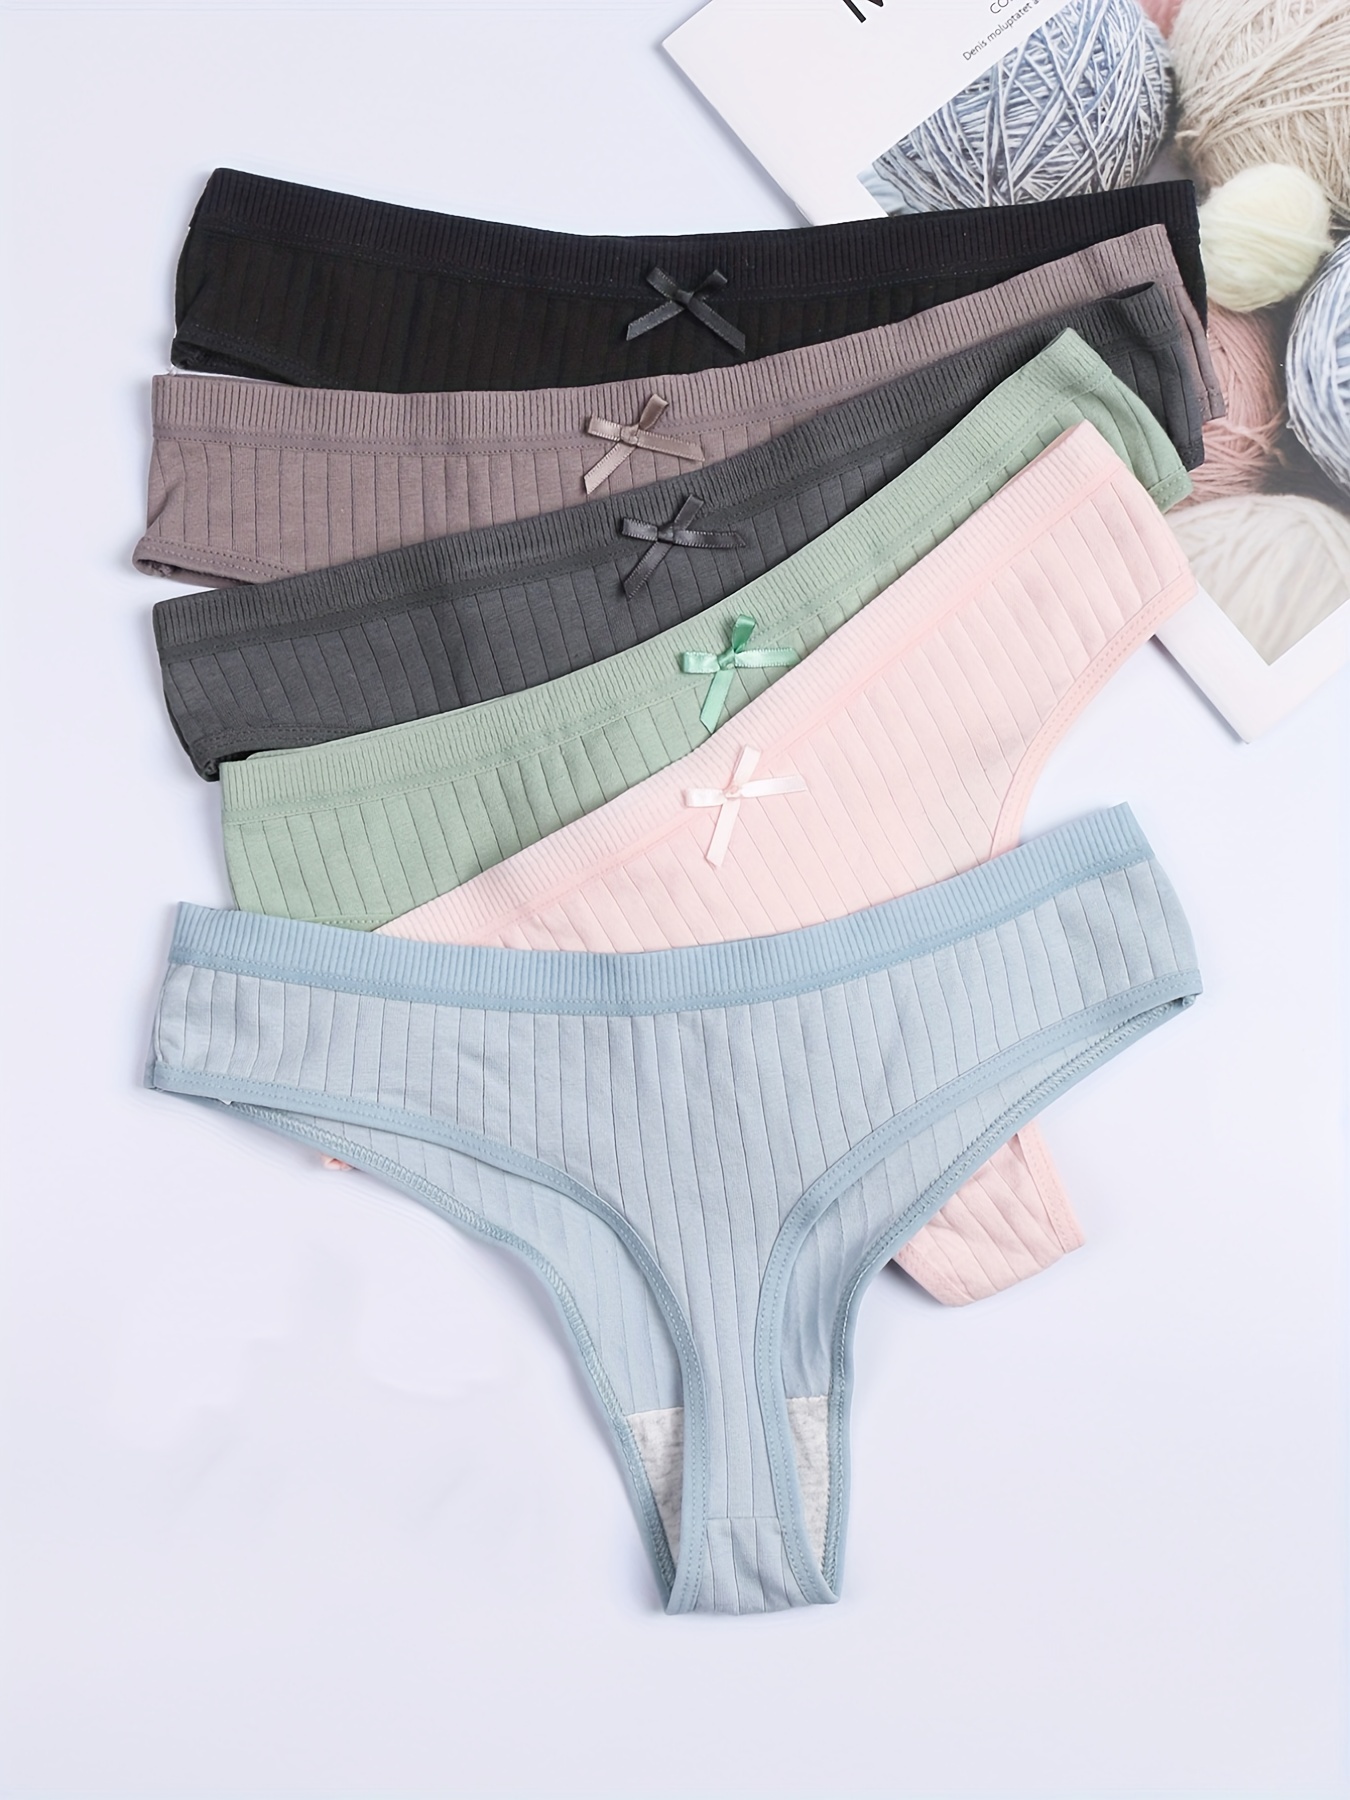 Fashion G-string Thong Ladies Underwear Pants(cotton Lace) 6pcs